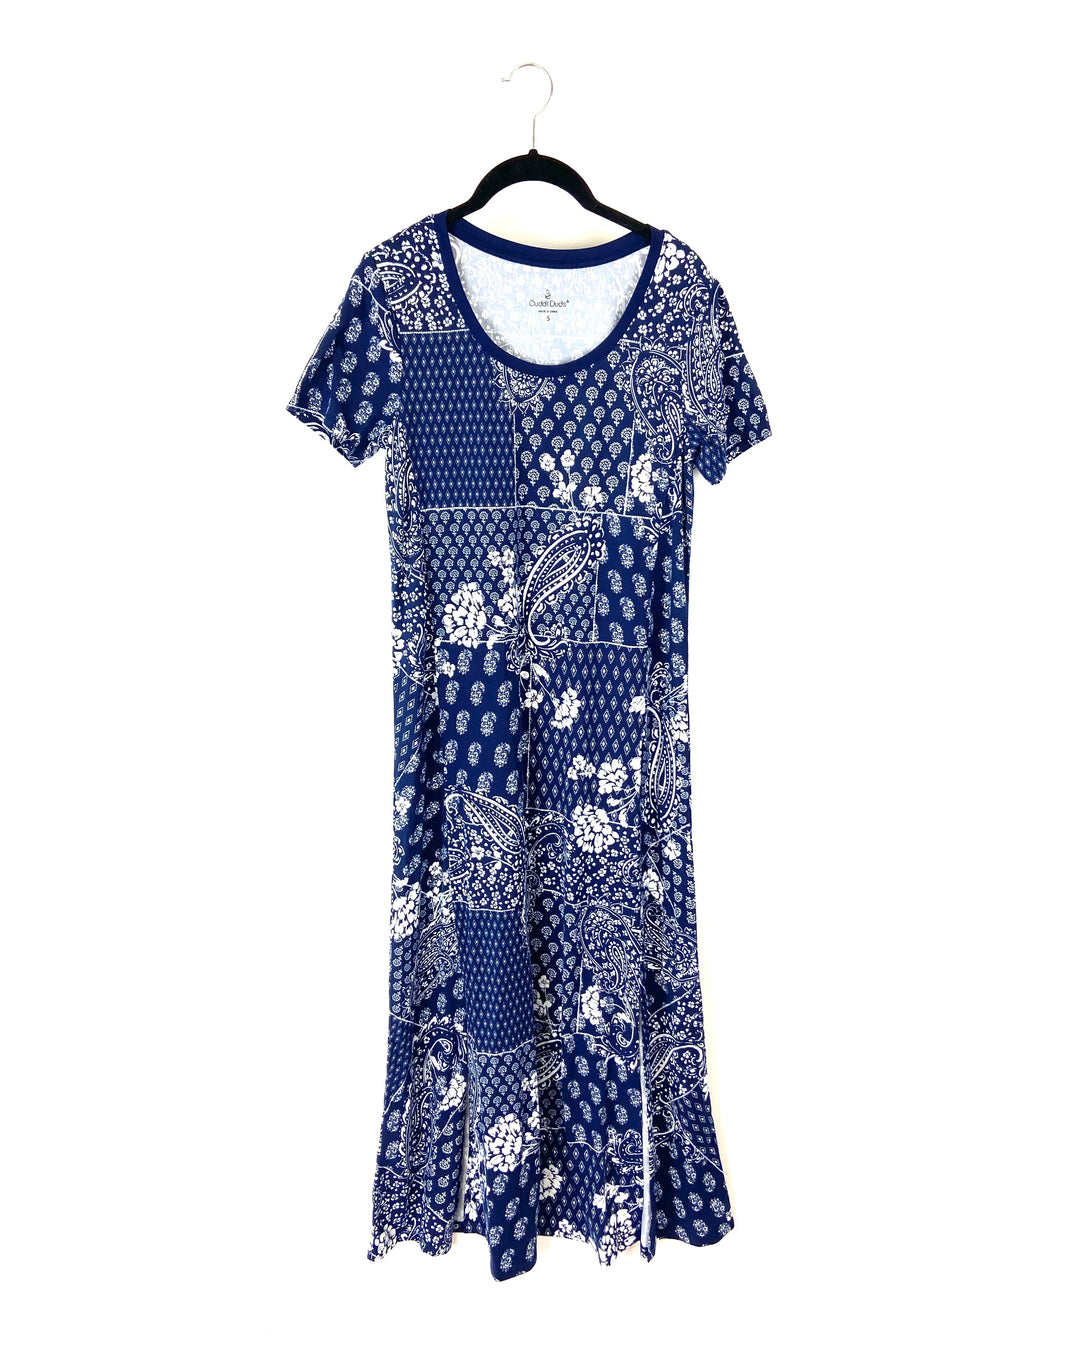 Navy Blue Abstract Print Maxi Dress - Size 6/8